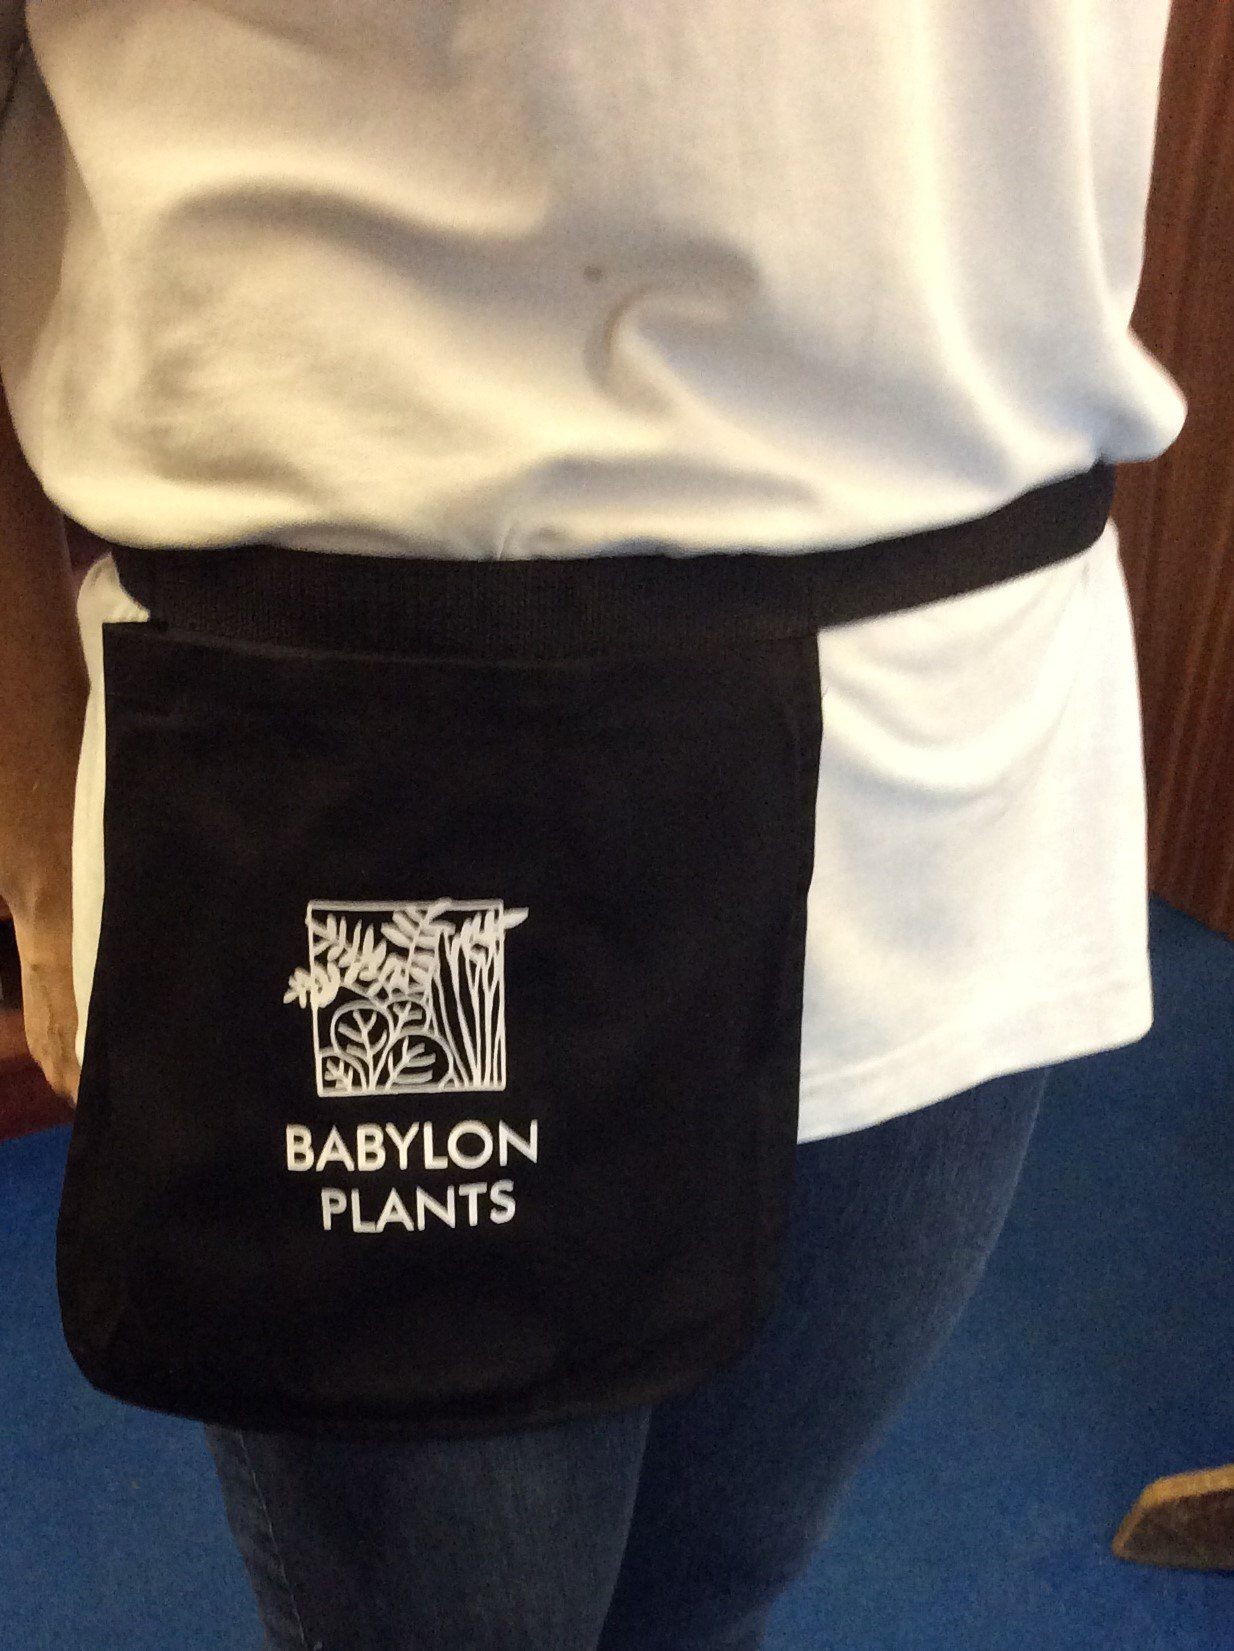 babylon plants apron